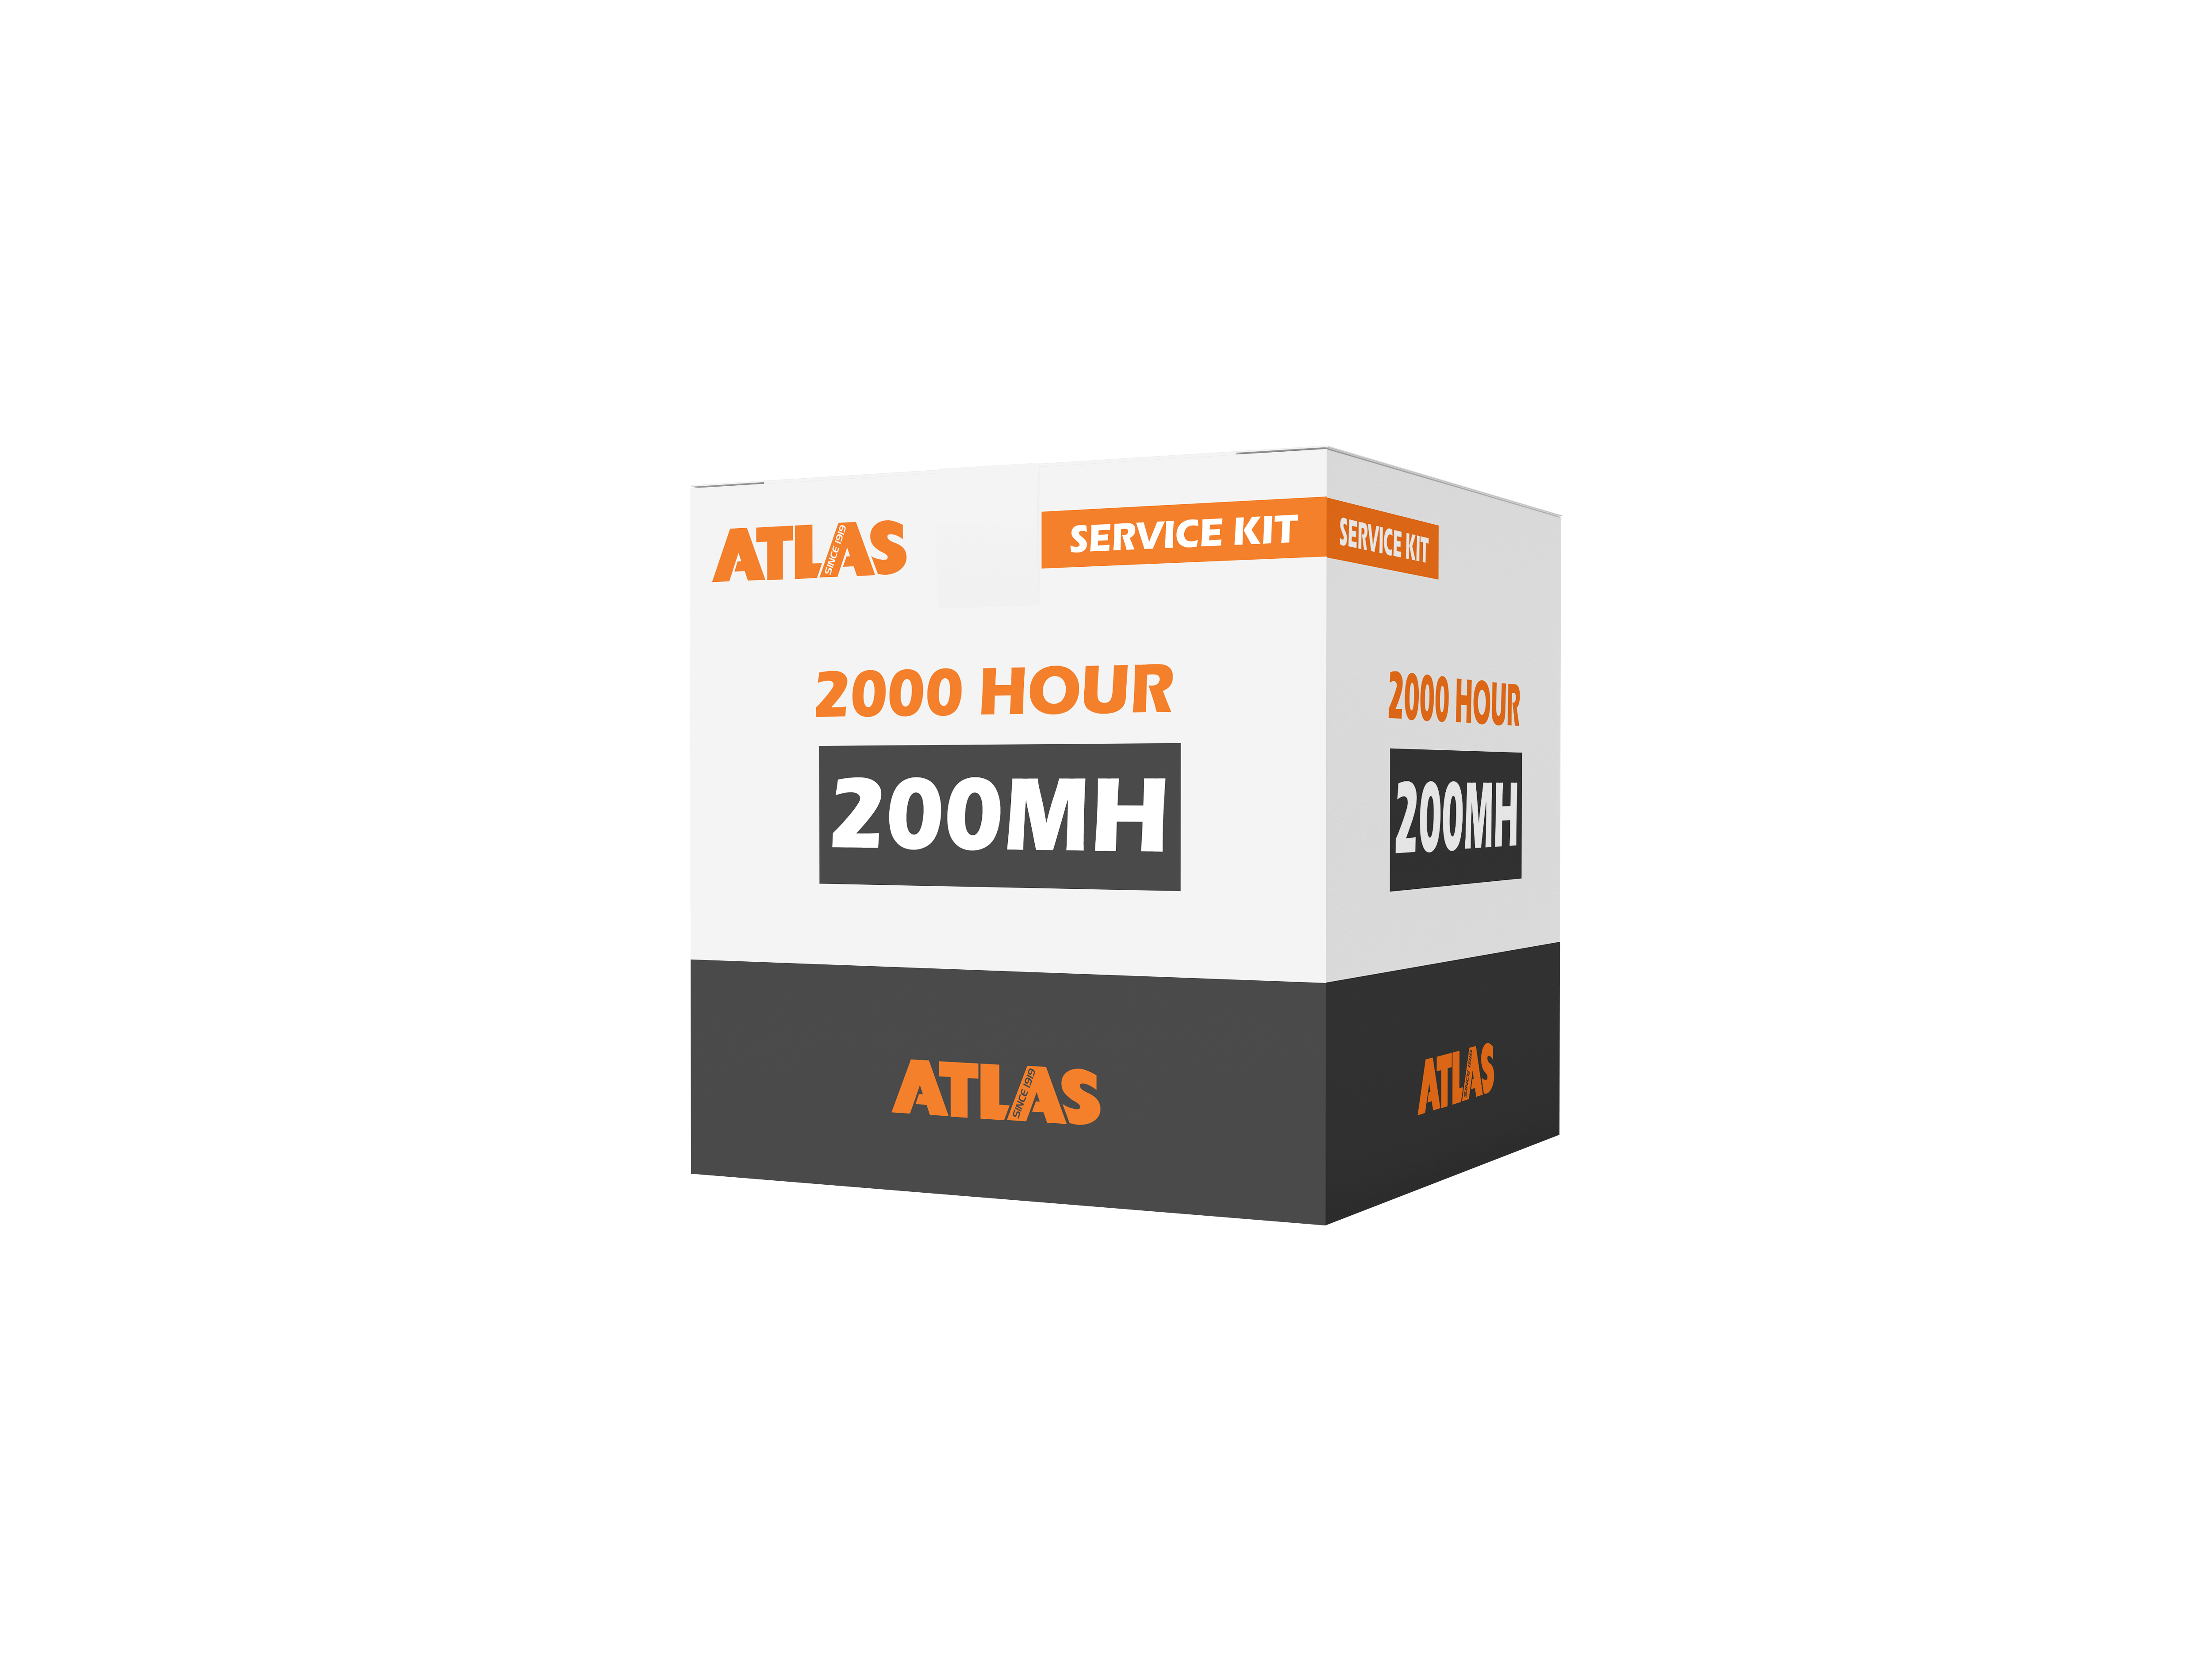 Atlas 200MH 2000 Hour Service Kit